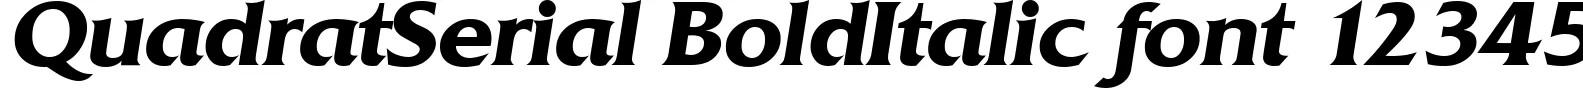 Dynamic QuadratSerial BoldItalic Font Preview https://safirsoft.com